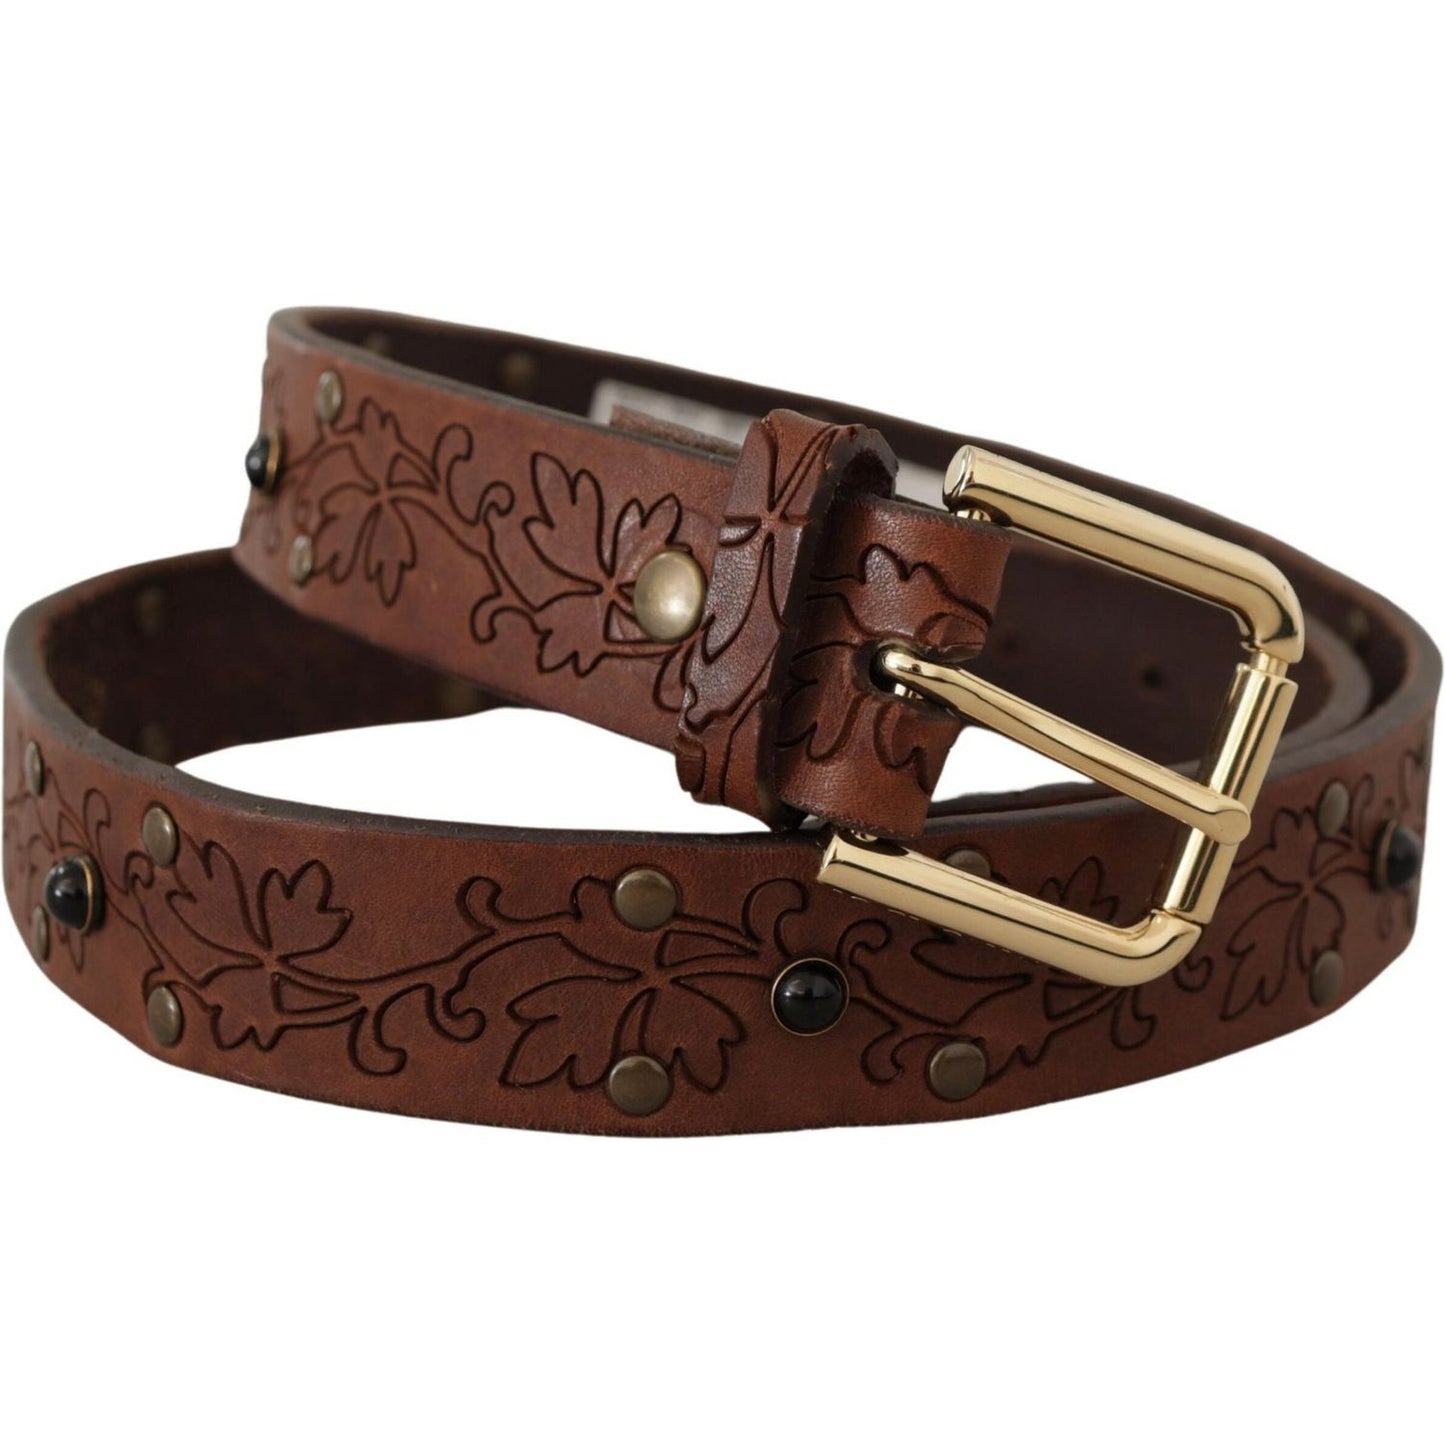 Dolce & Gabbana Elegant Leather Belt with Metal Buckle brown-leather-floral-studded-metal-buckle-belt